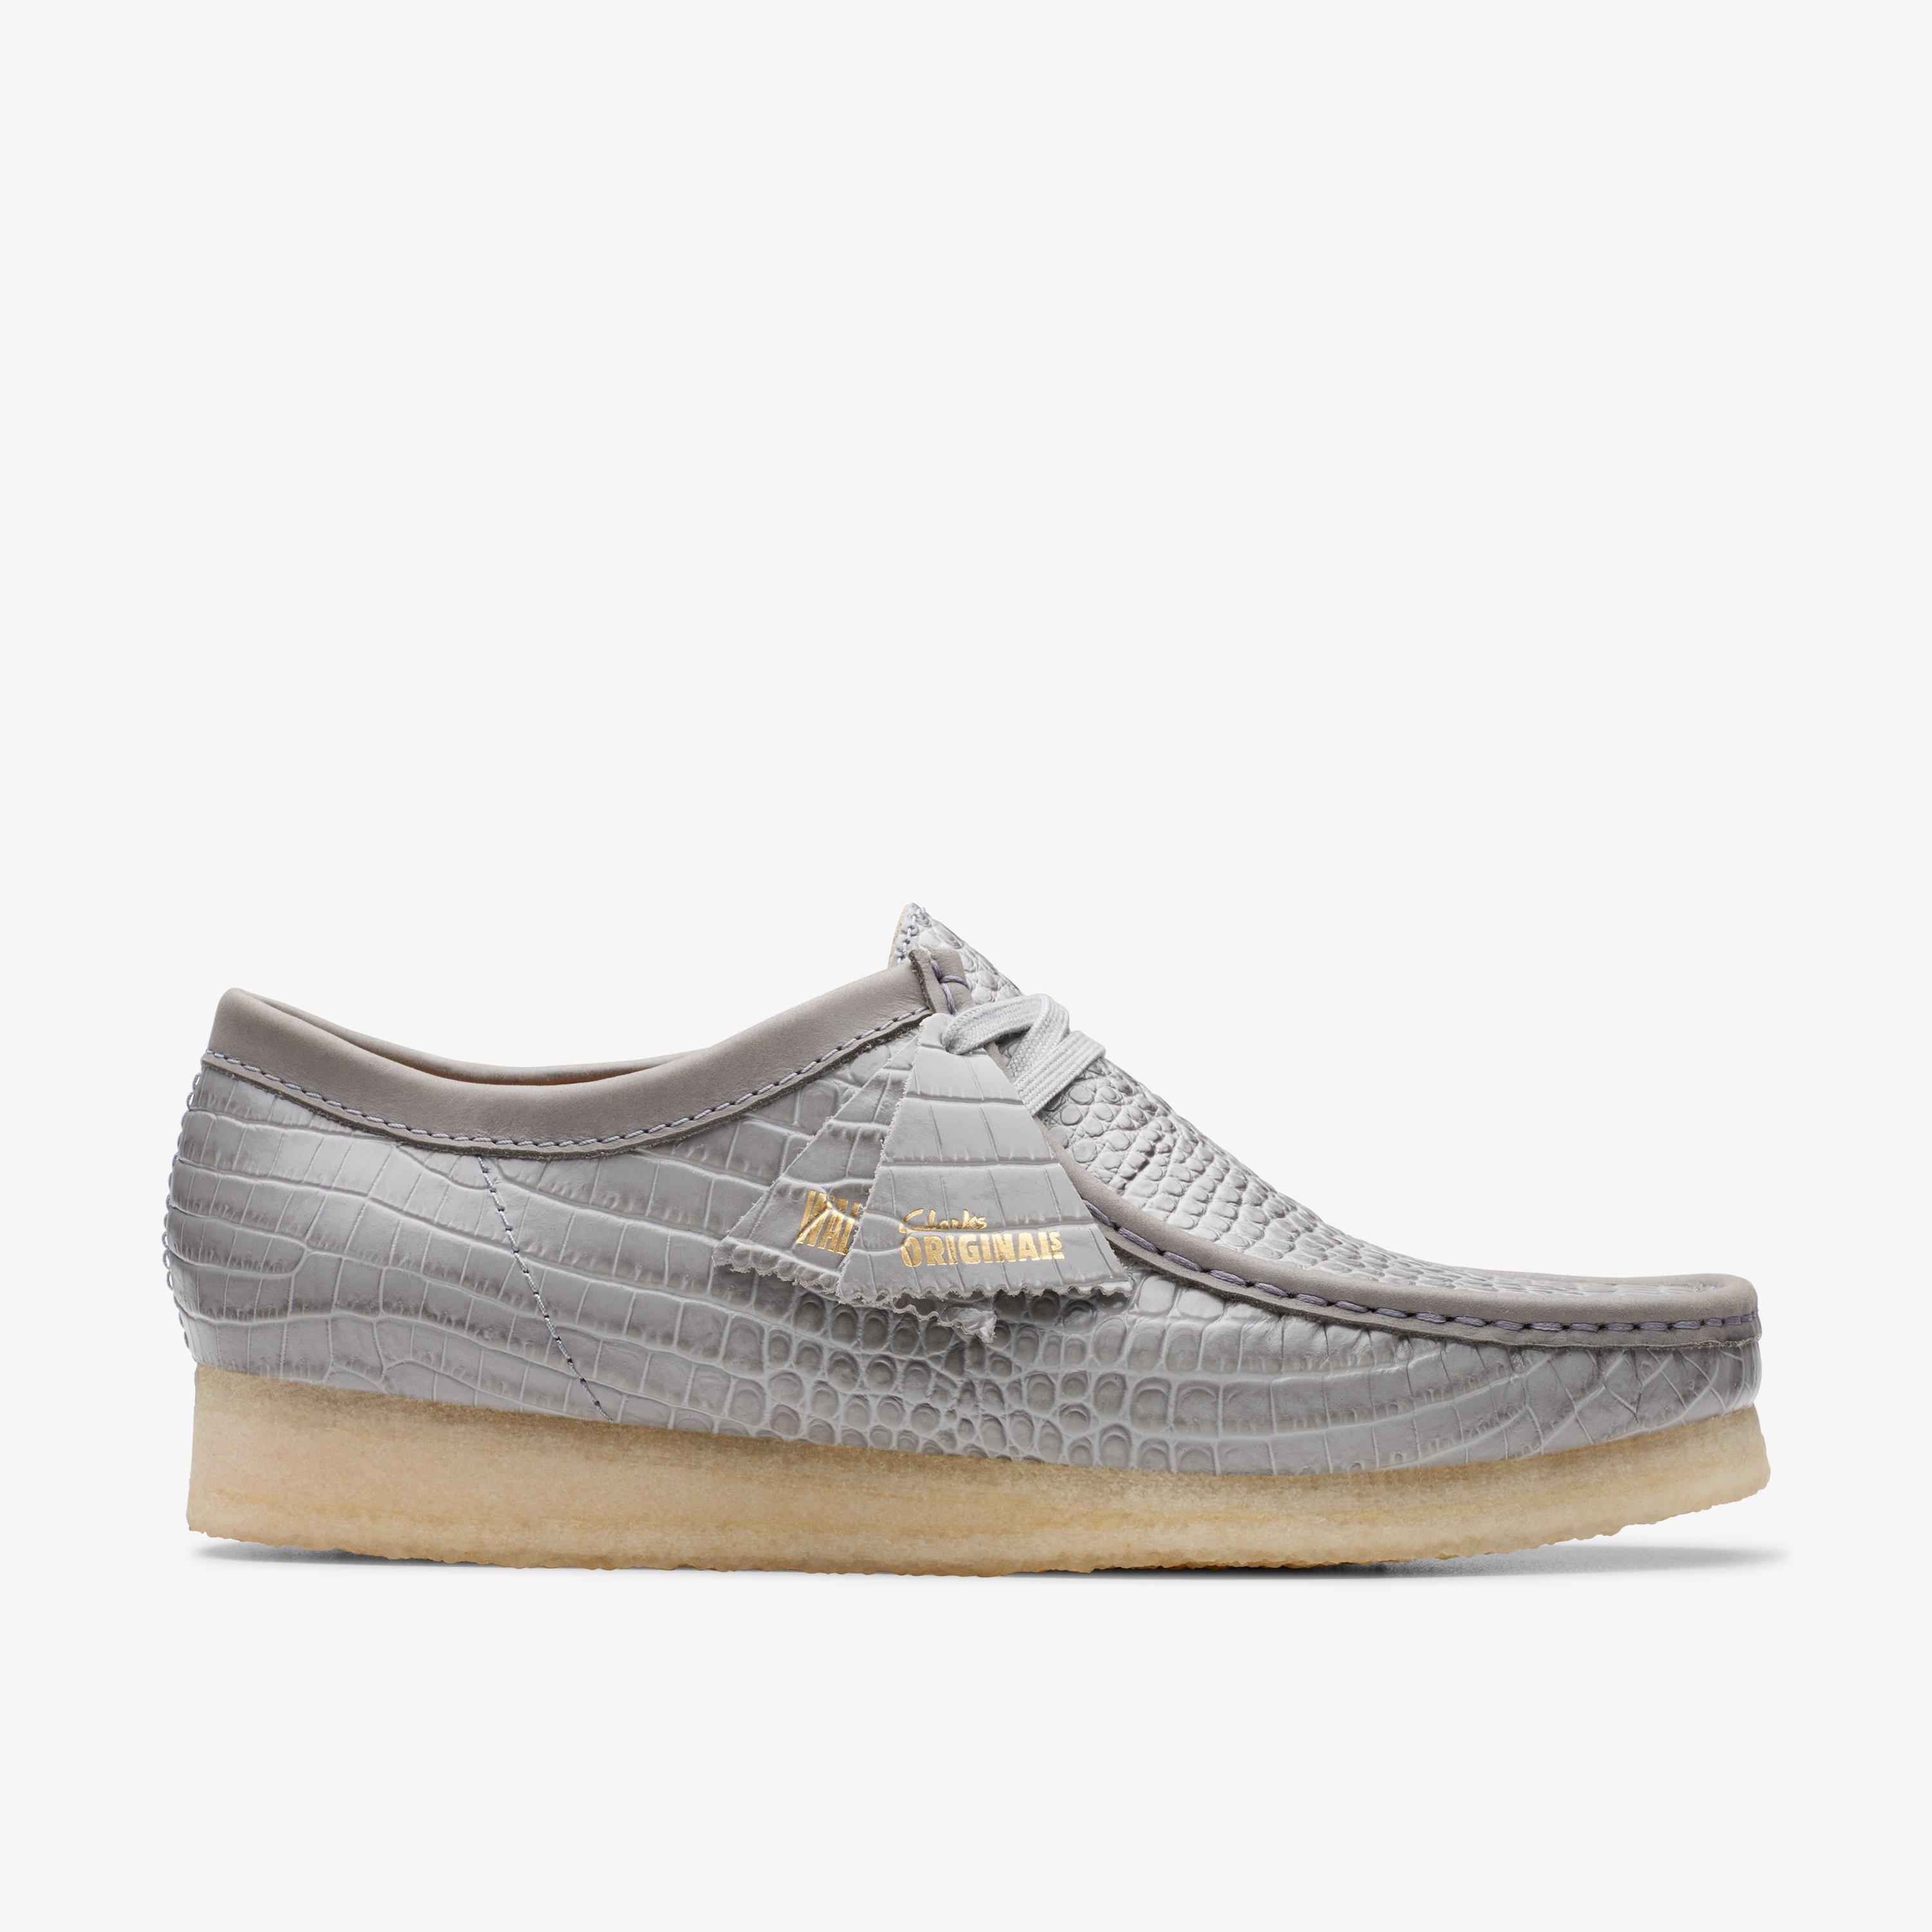 Size 12 Clarks Originals Wallabee Grey Croc shoes